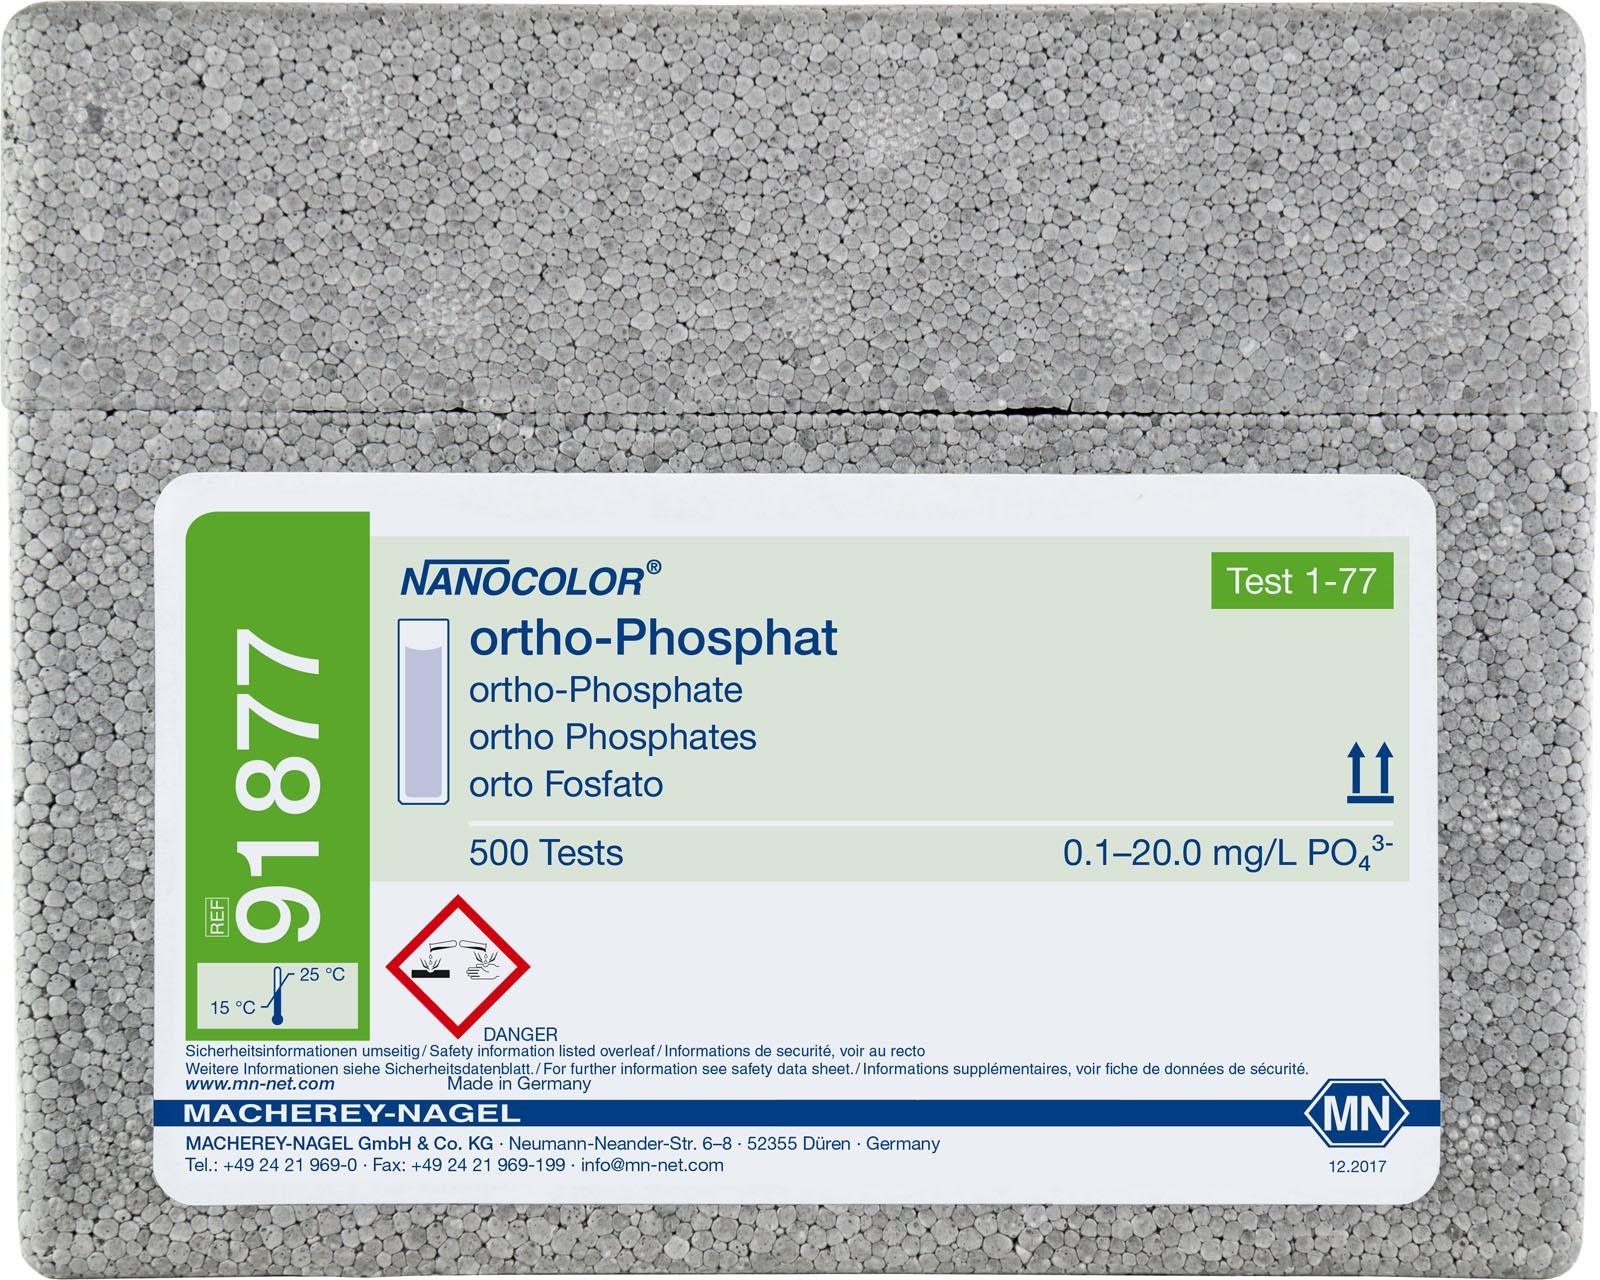 NANOCOLOR® Ortho-Phosphate Standard Test